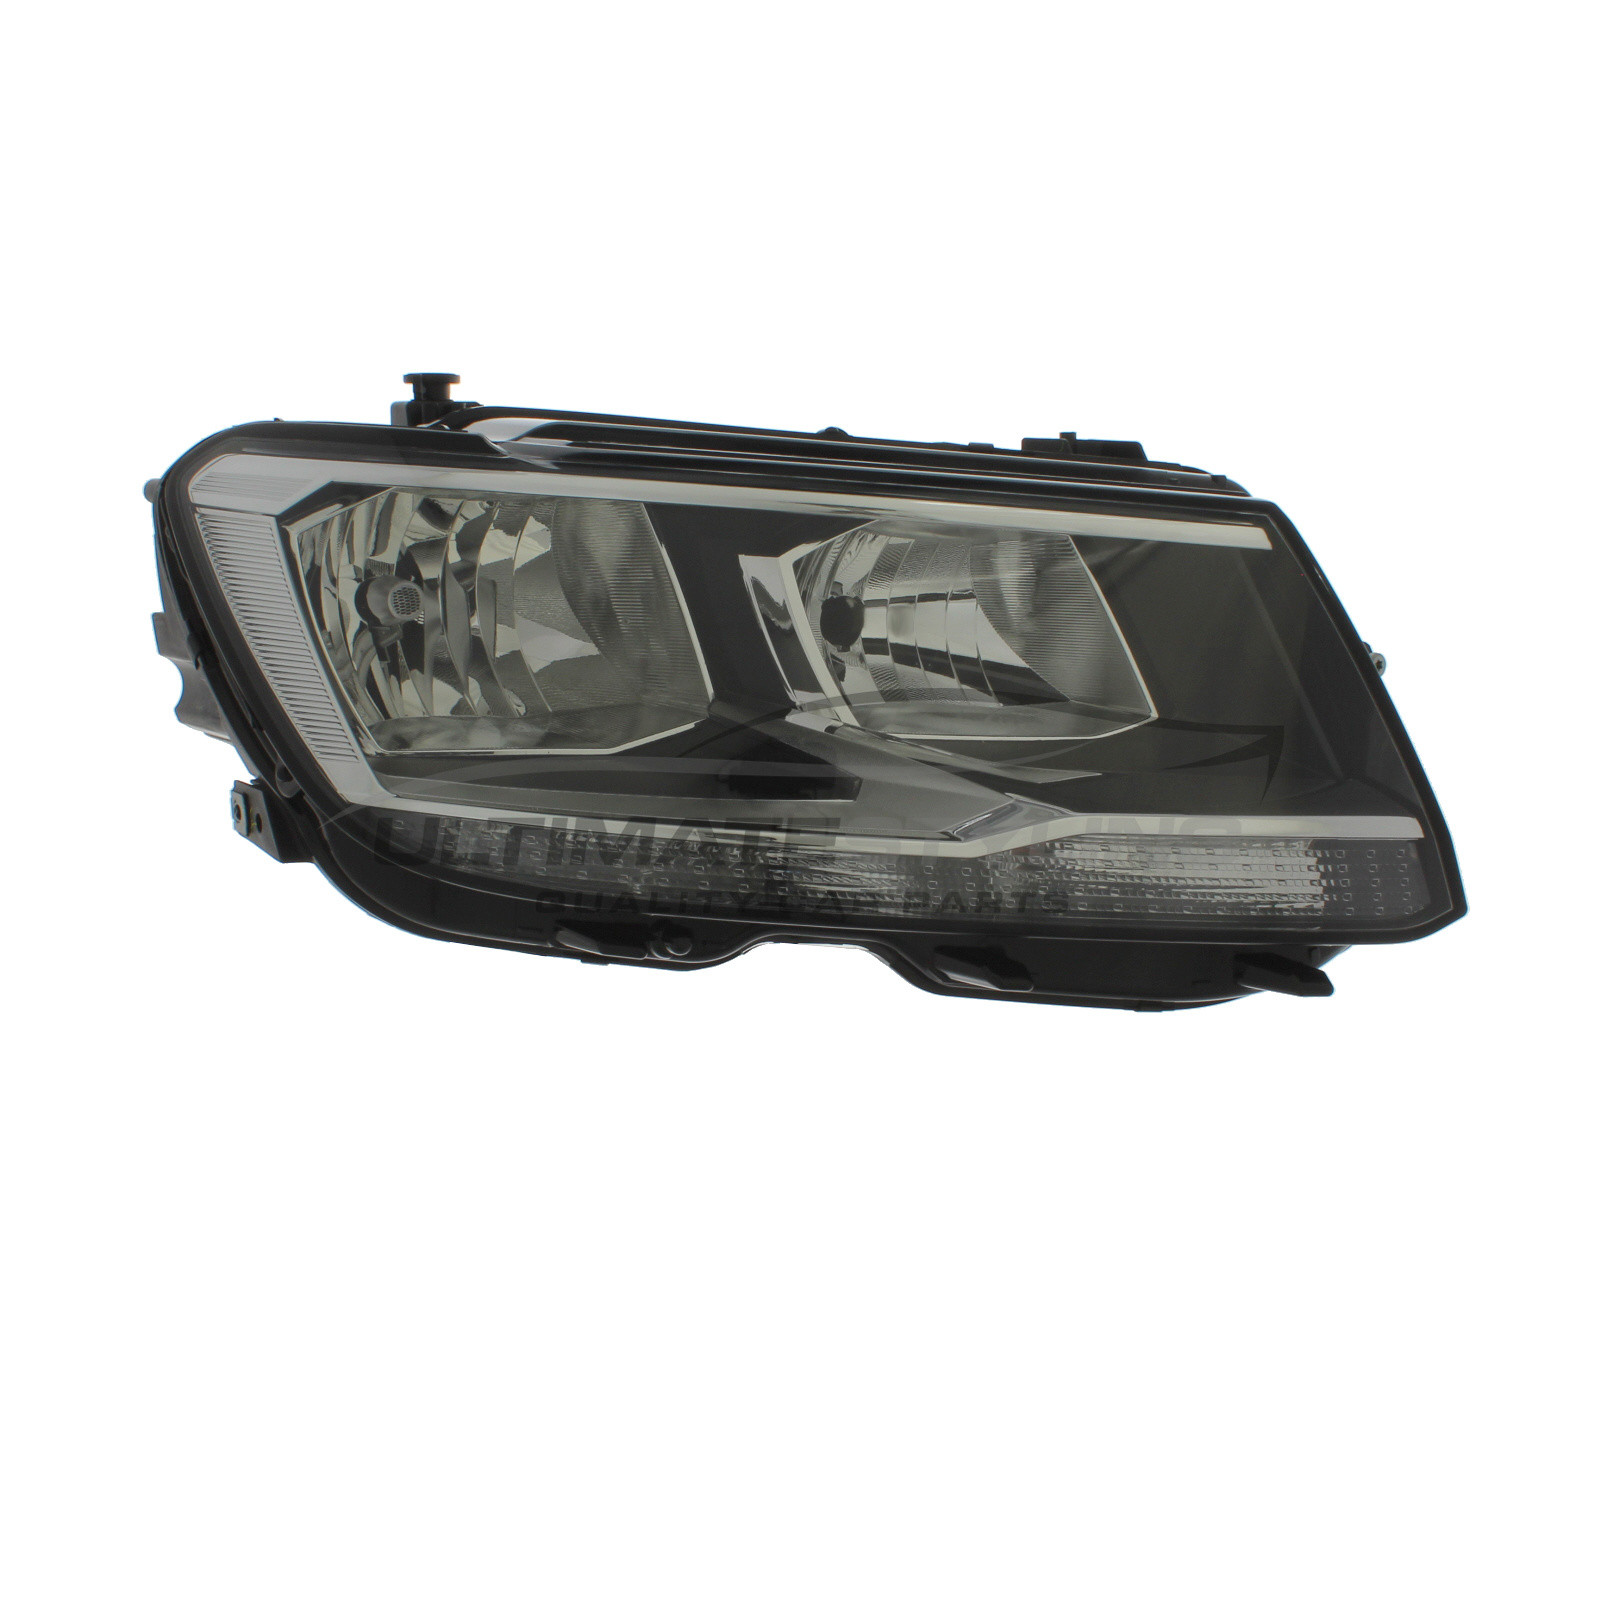 Headlight / Headlamp for VW Tiguan